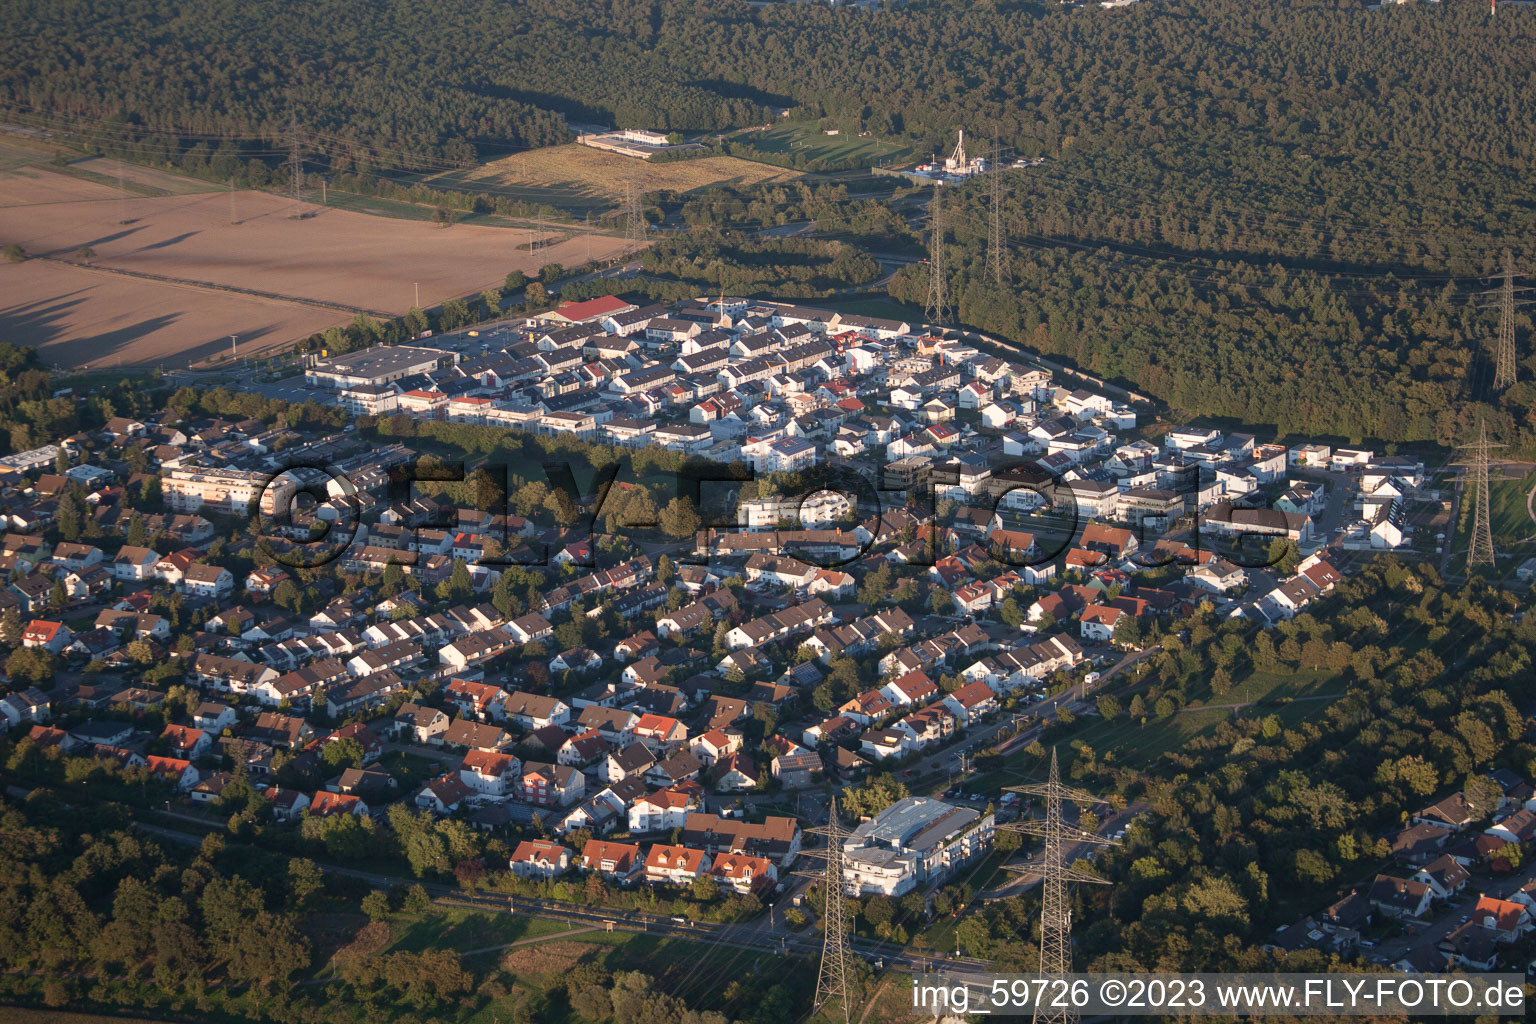 Drone recording of District Leopoldshafen in Eggenstein-Leopoldshafen in the state Baden-Wuerttemberg, Germany